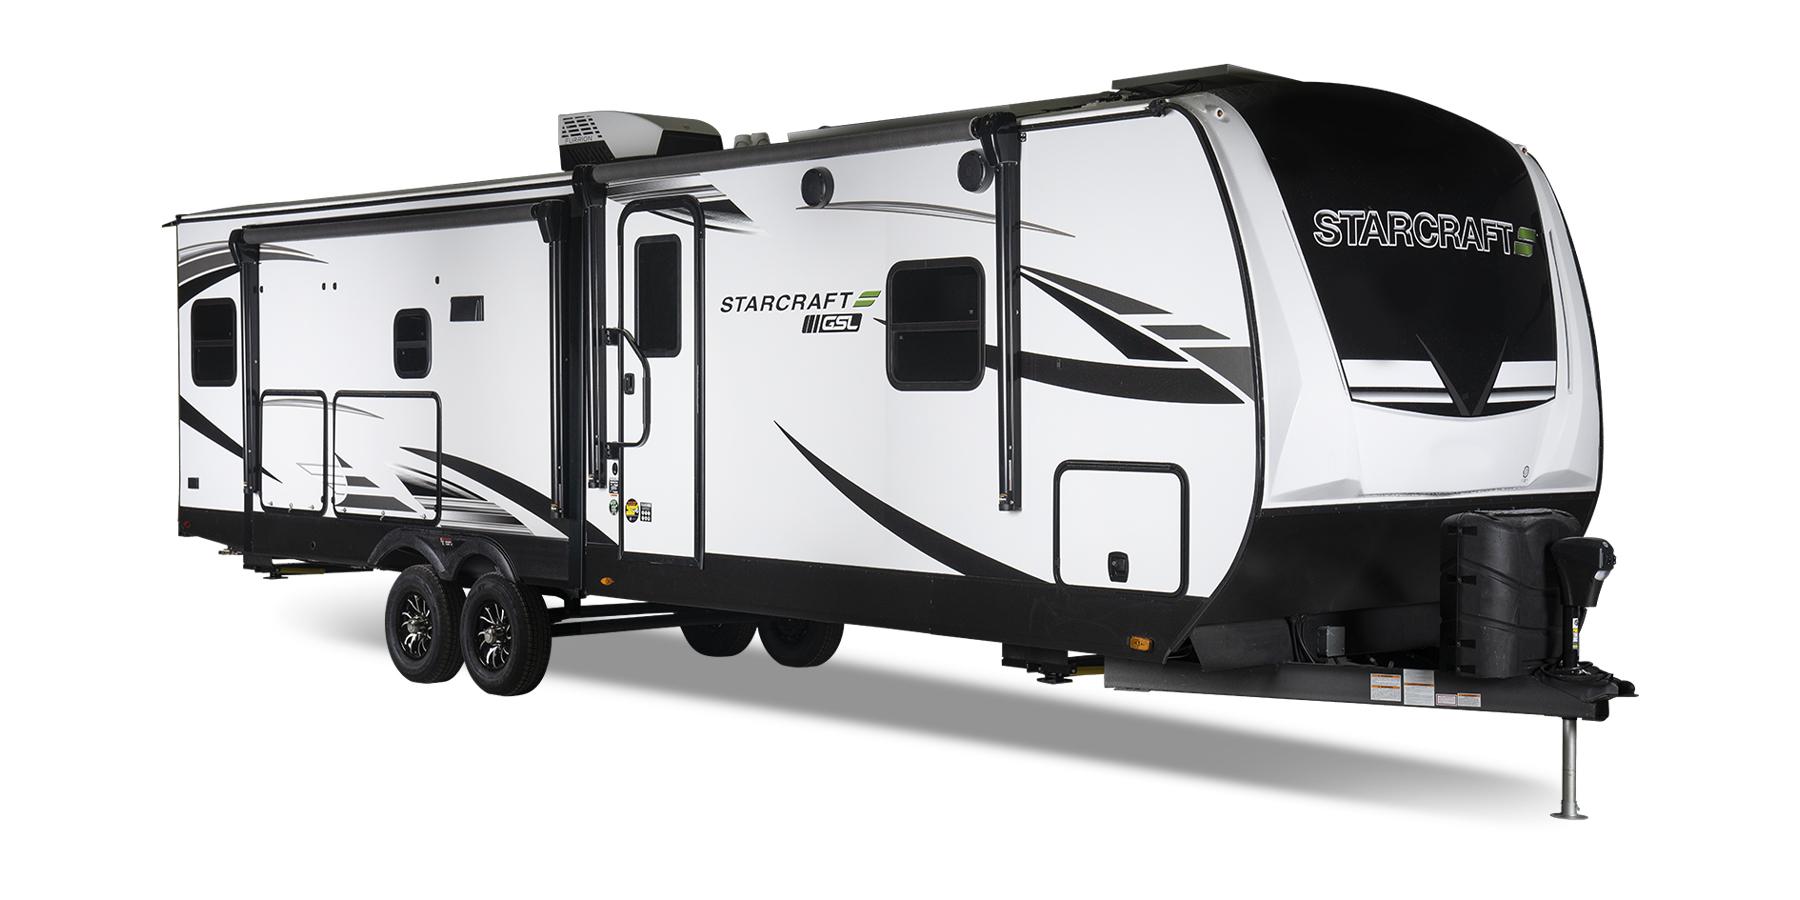 starcraft travel trailer dealers